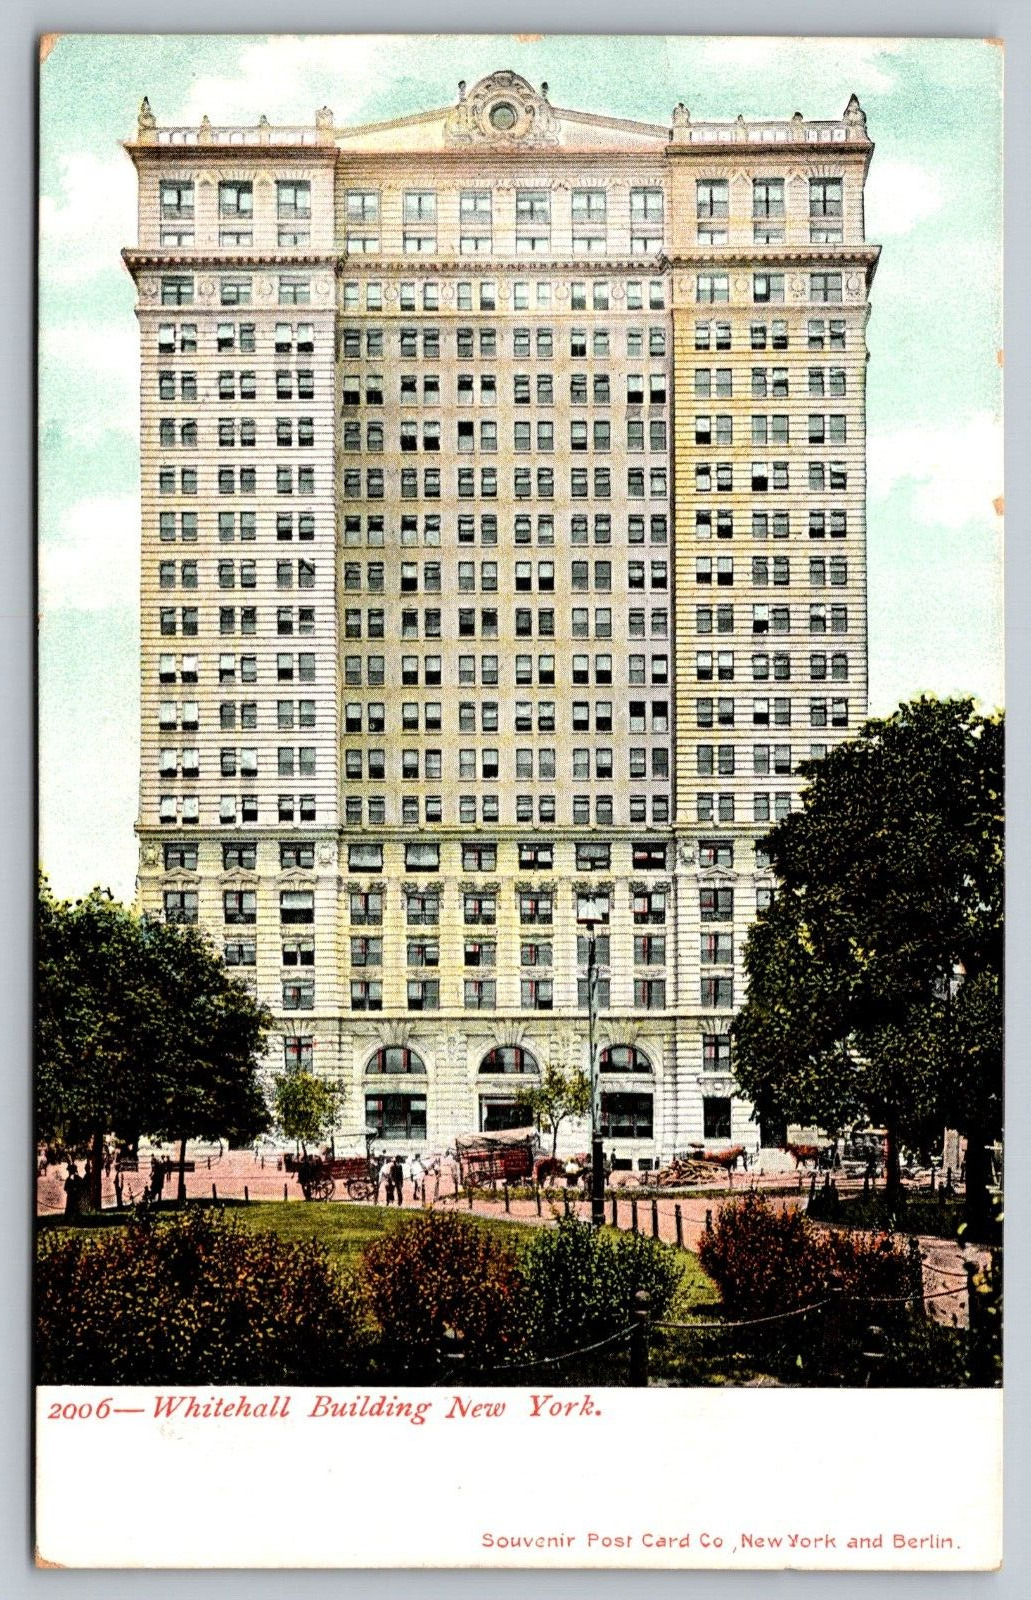 New York,NY Whitehall Building Souvenir Post Card Co. Antique Postcard Vintage